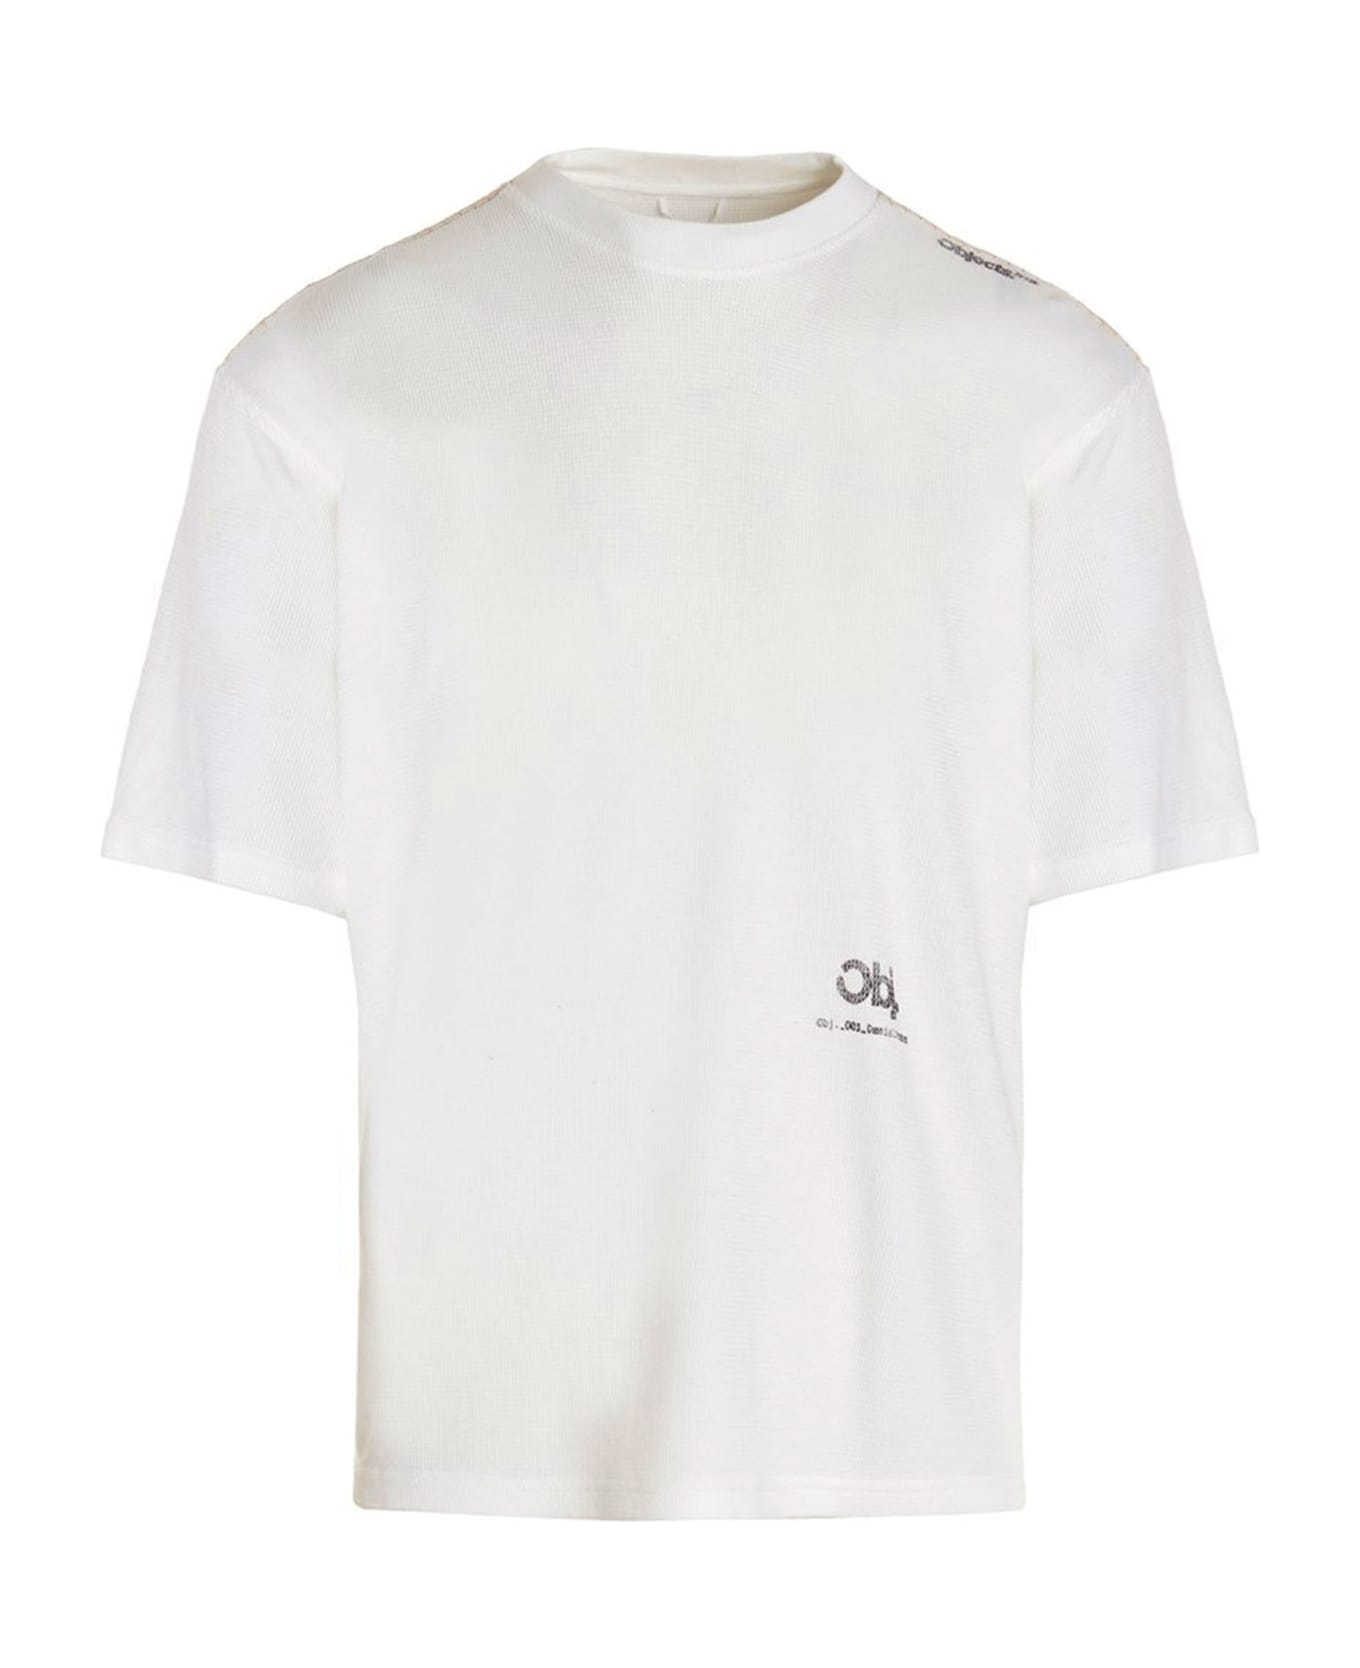 Objects Iv Life 'logo' T-shirt - White